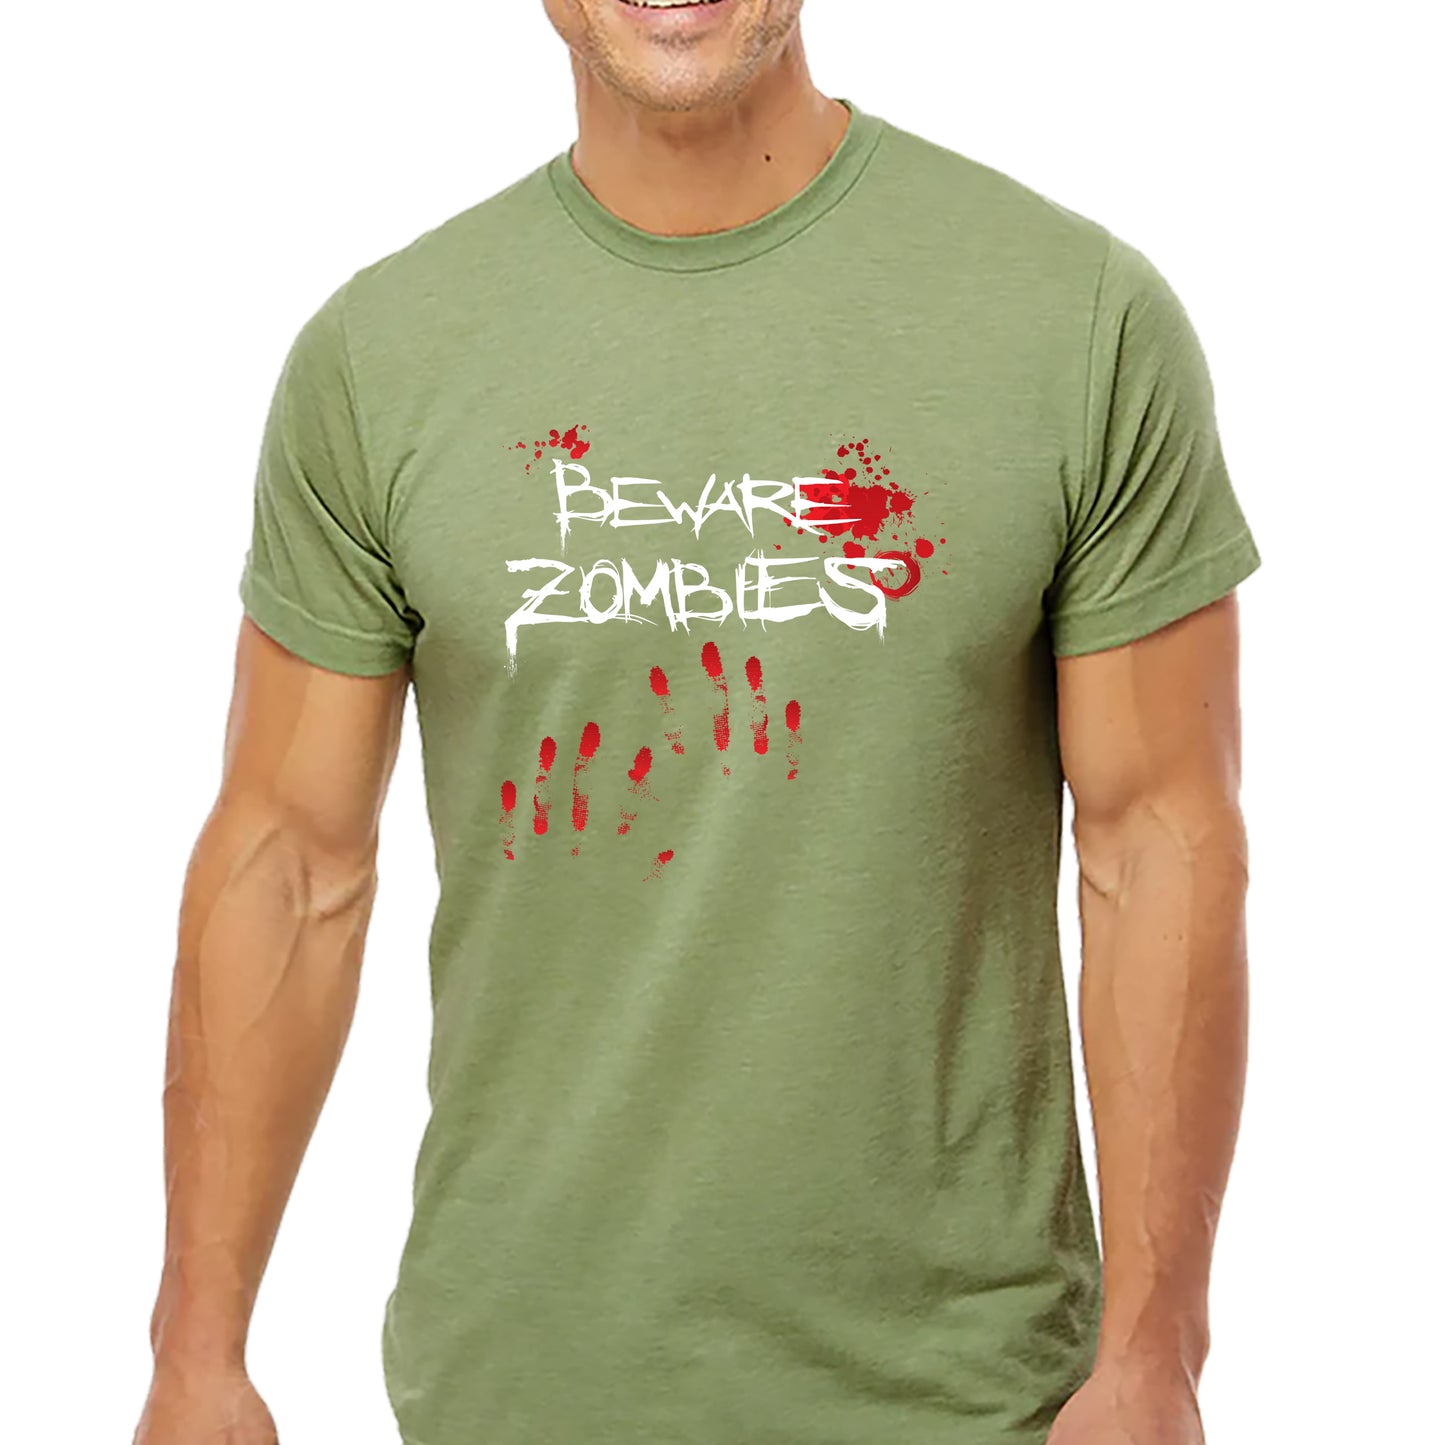 Bevare Zombies T-shirt